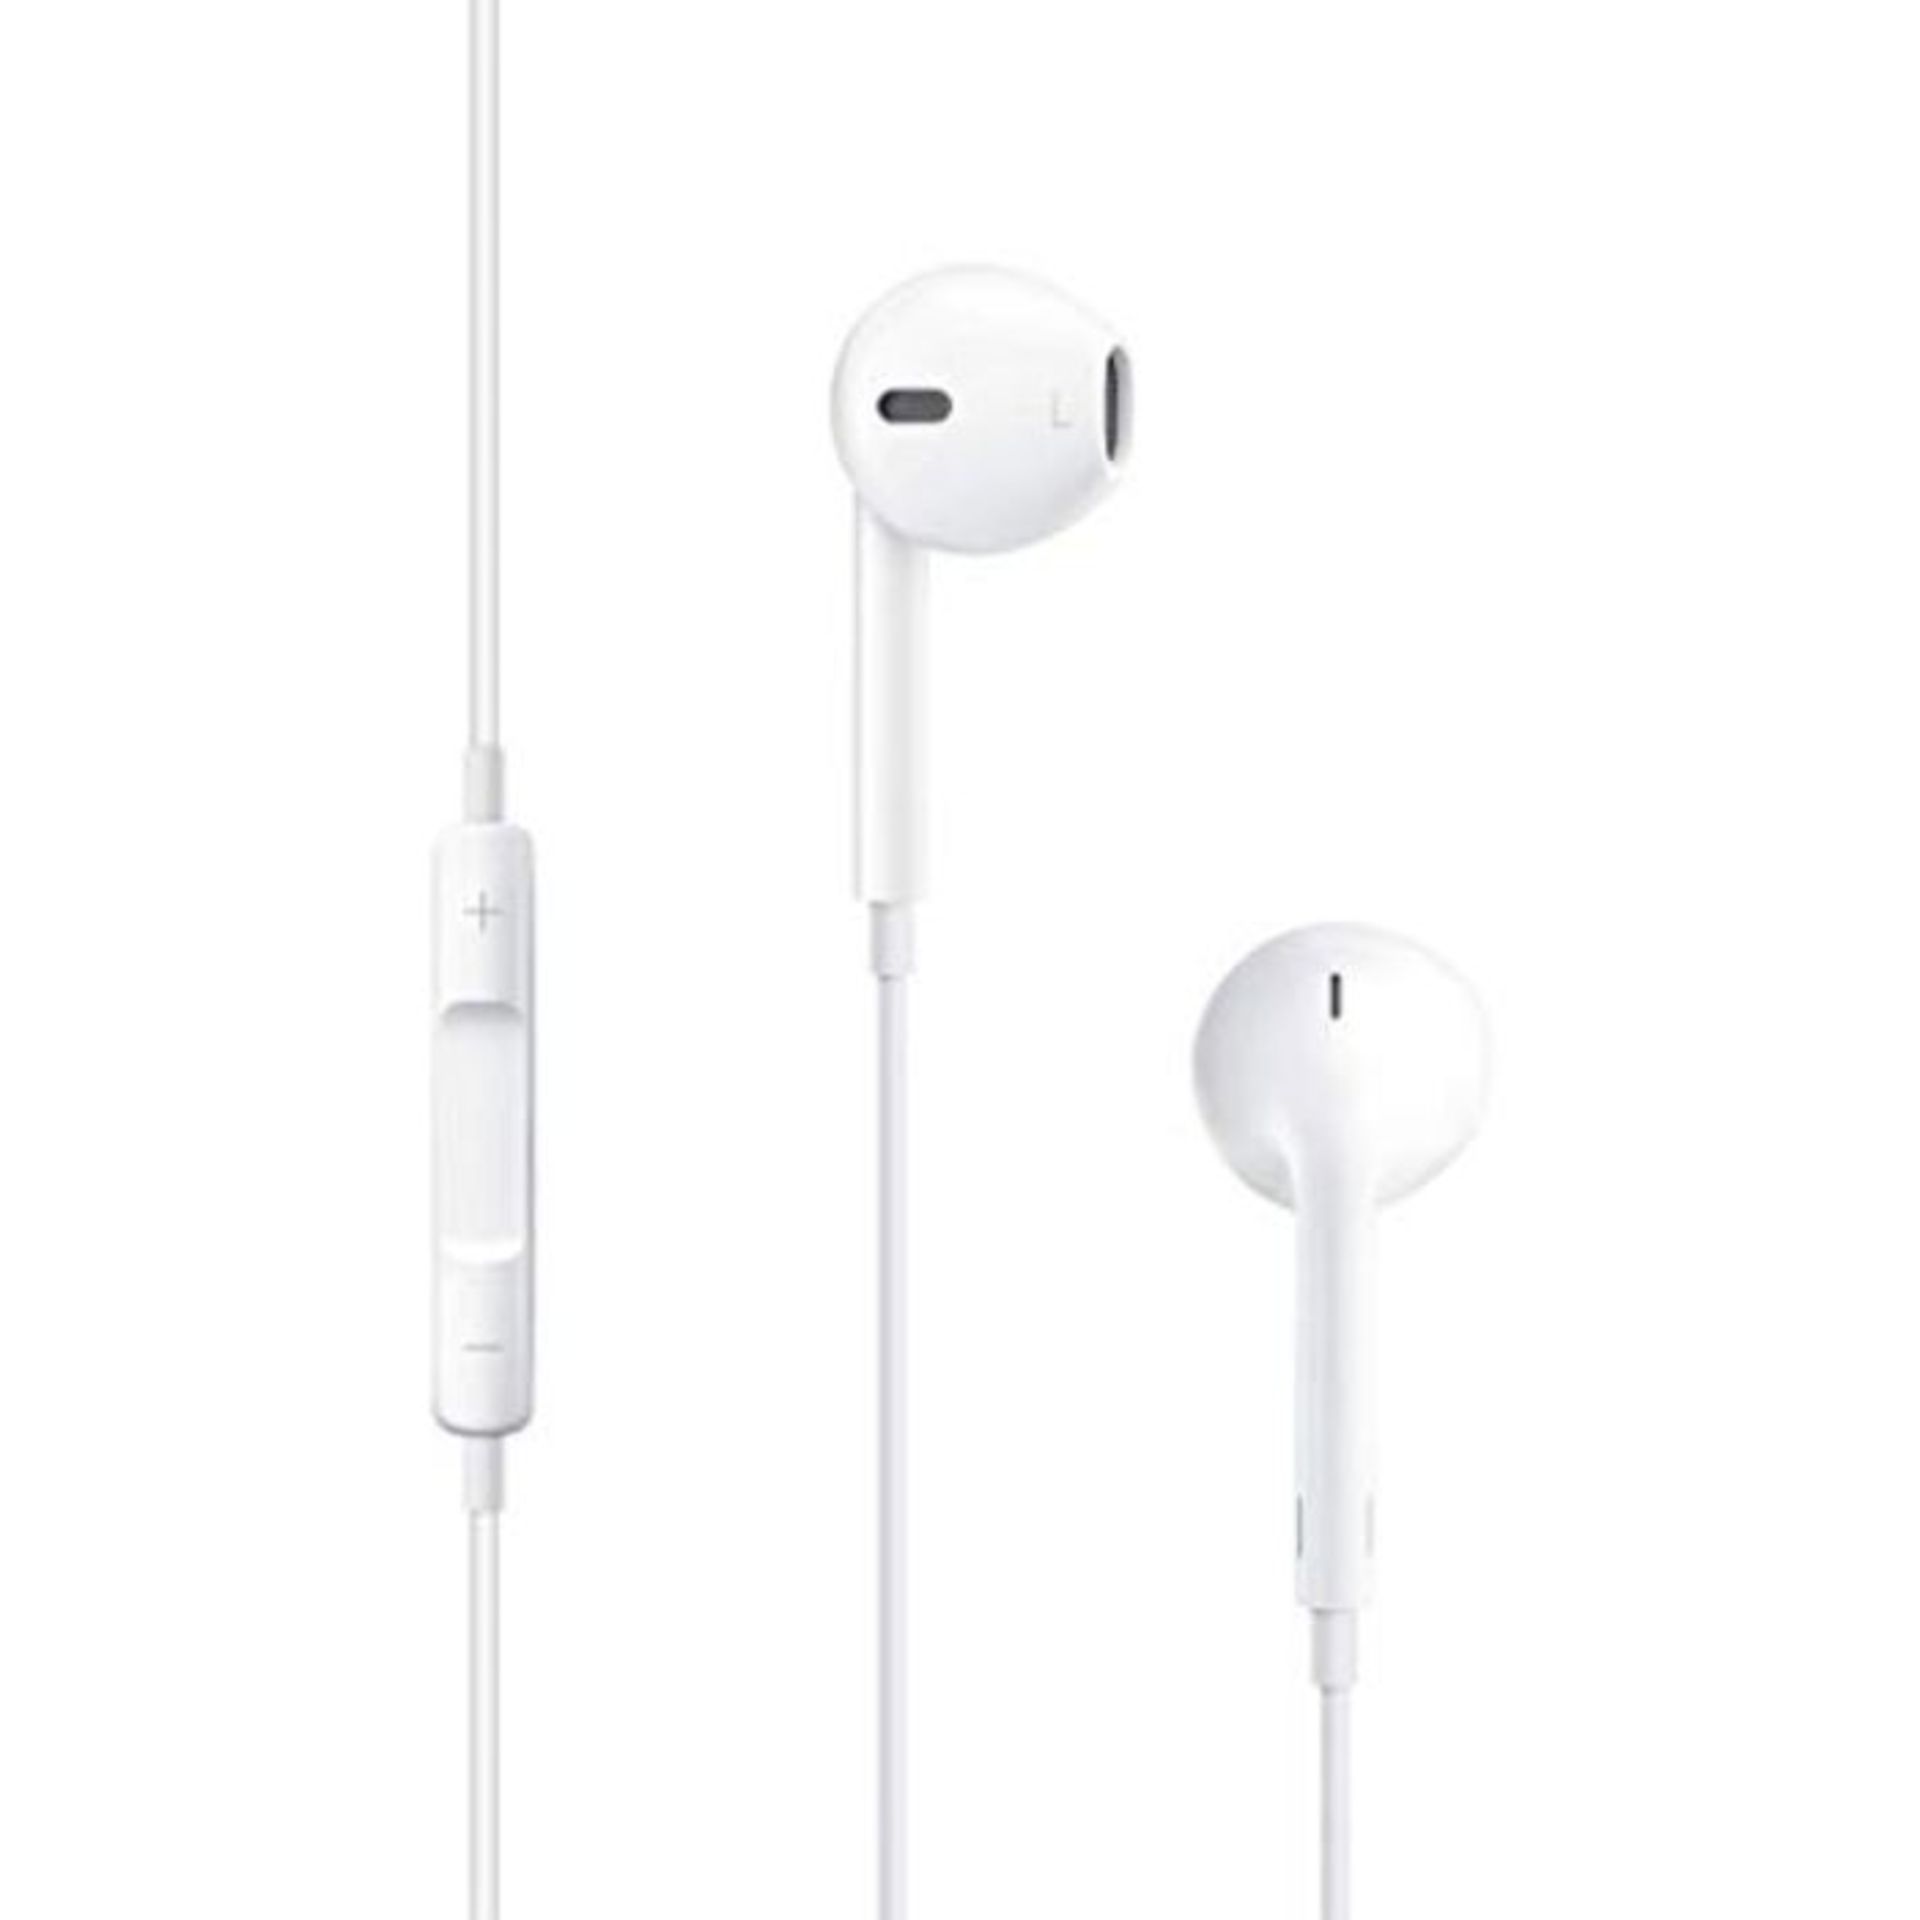 [CRACKED] EarPods with 3.5mm Headphone Plug